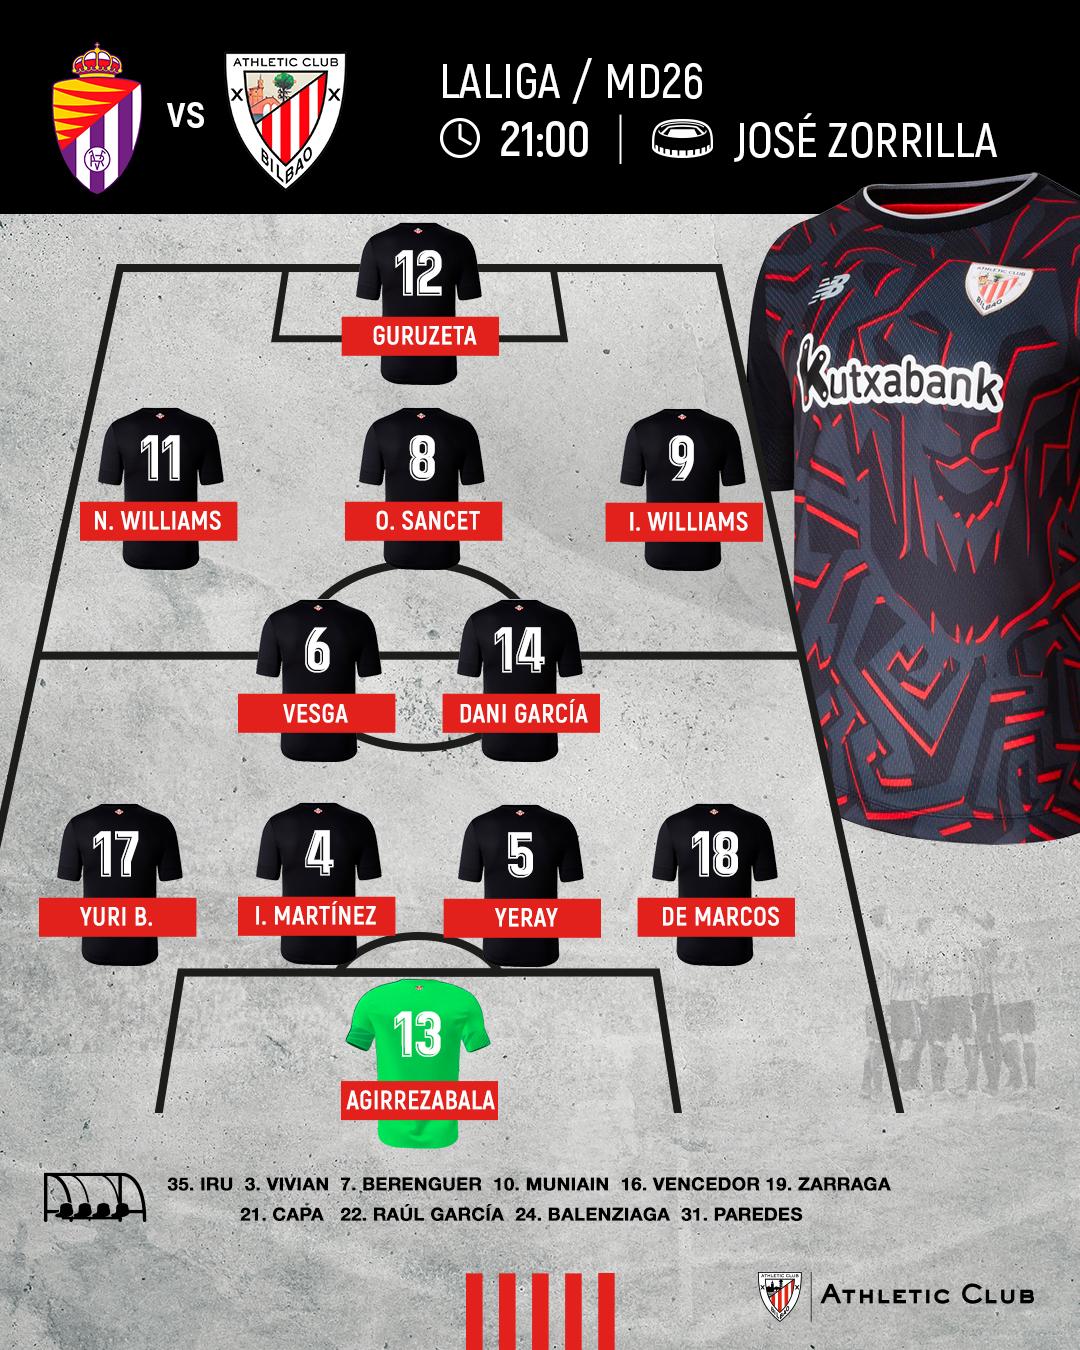 Line-up: Real Valladolid vs Athletic Club (LaLiga MD26)